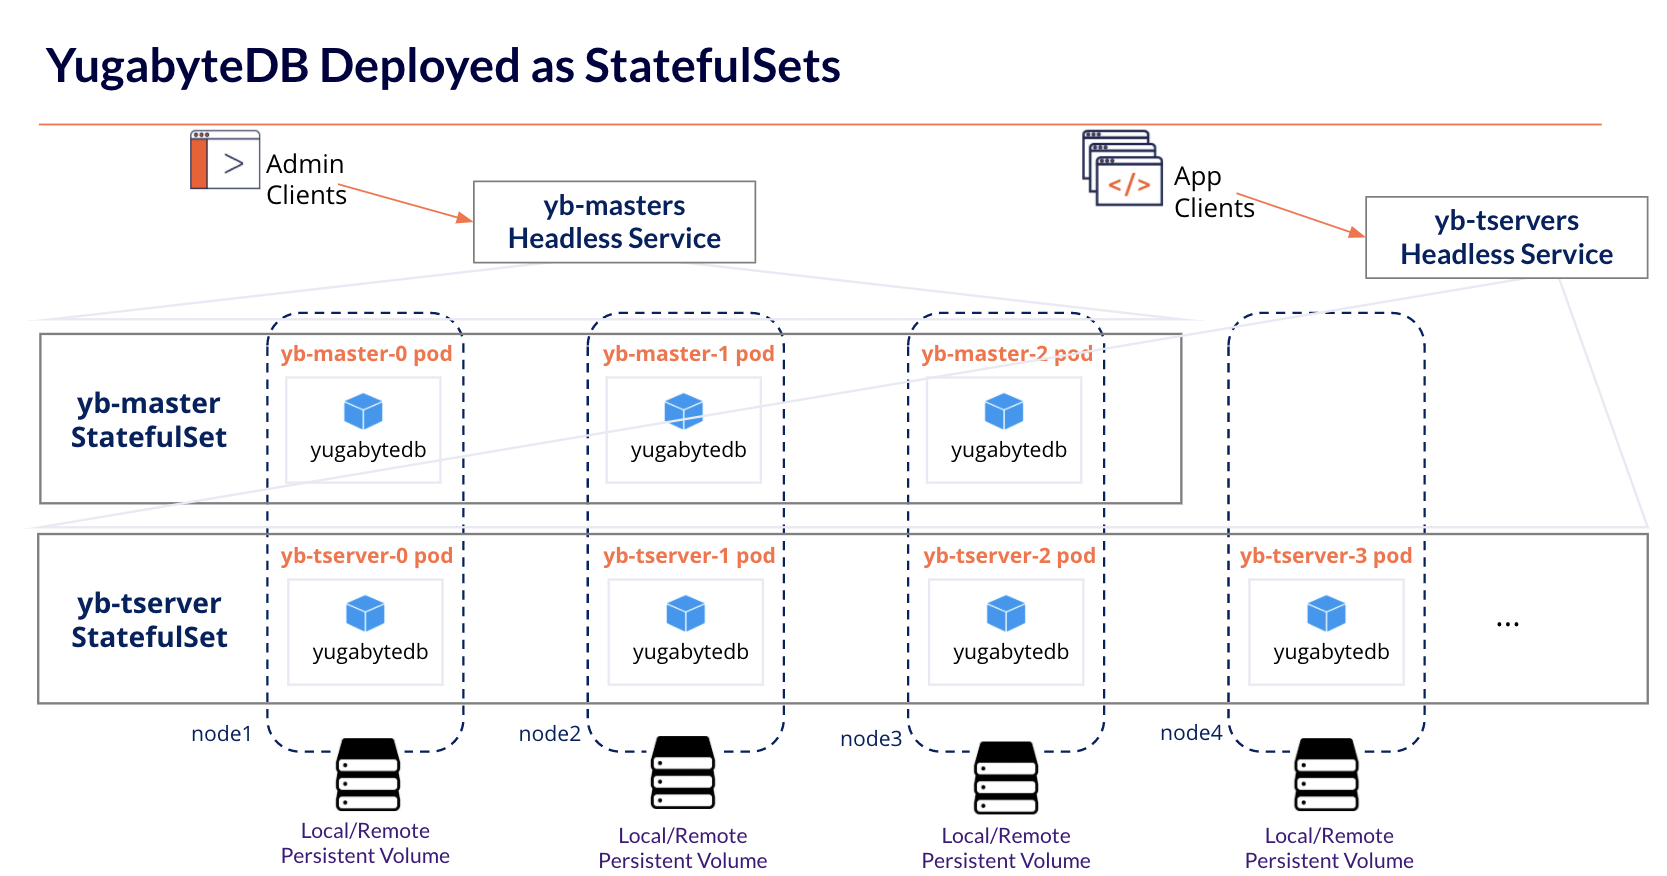 YugabyteDB Deployed as StatefulSets